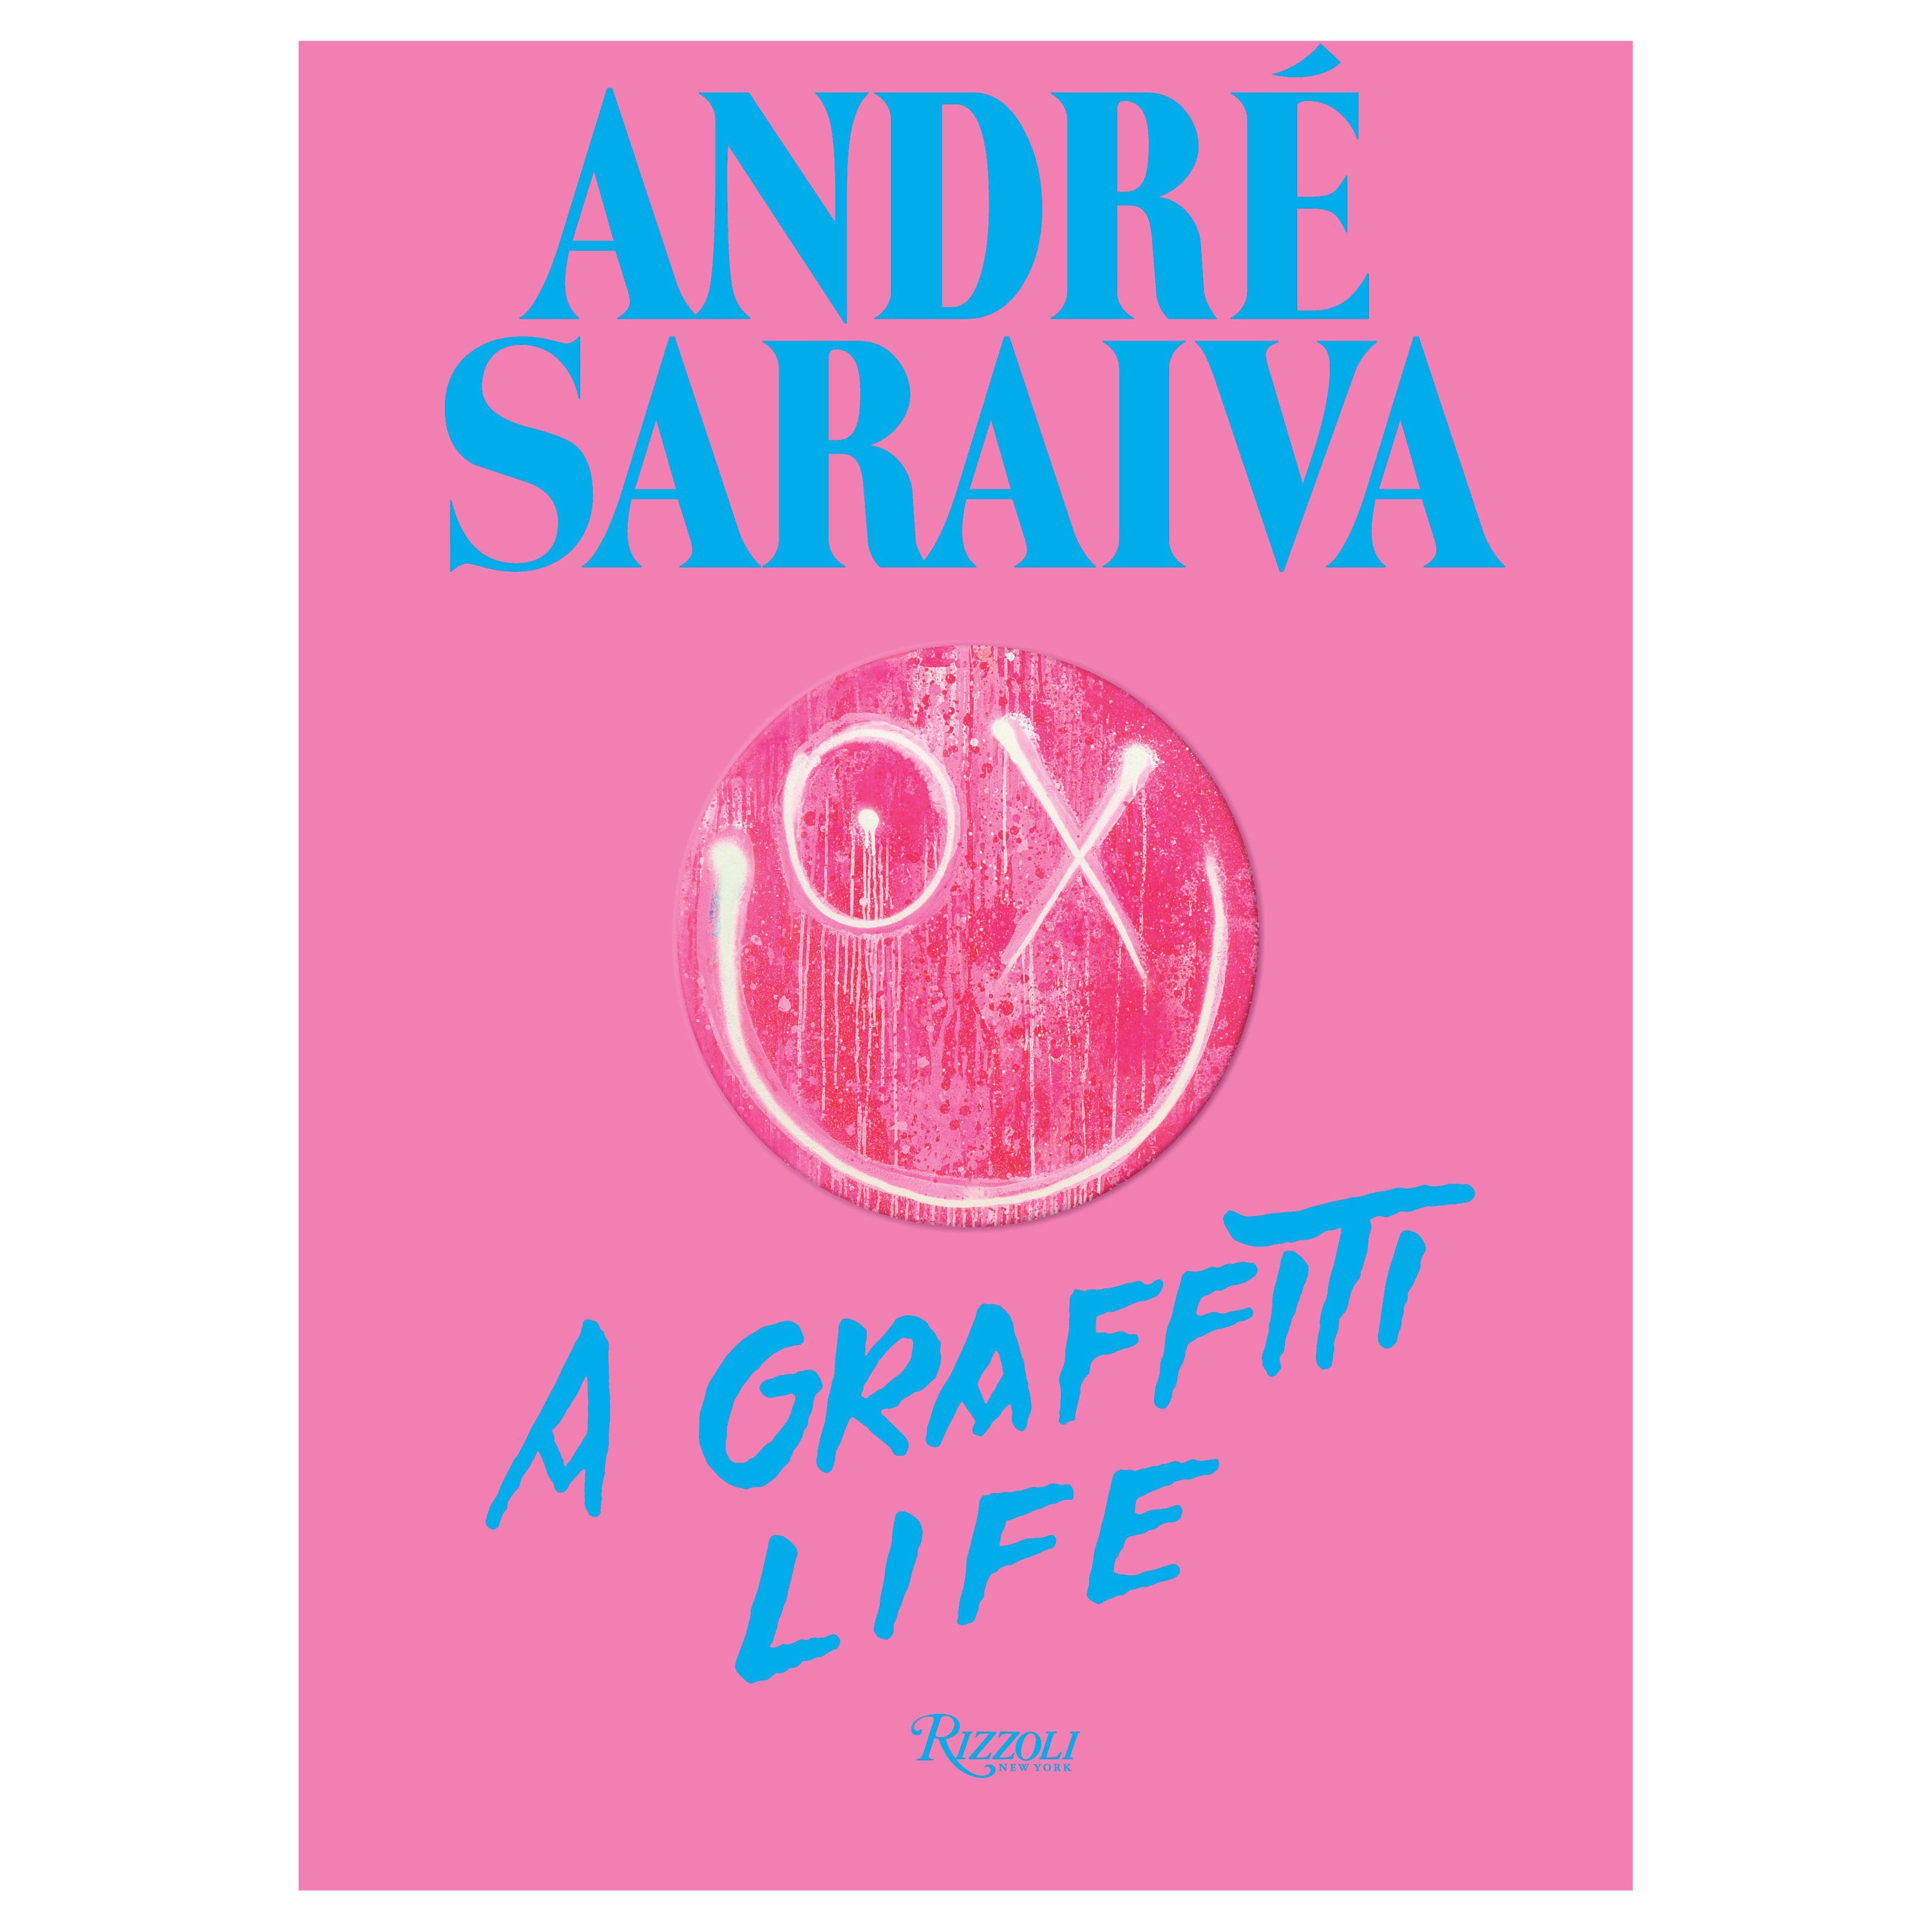 André Saraiva, Graffiti Life im Angebot